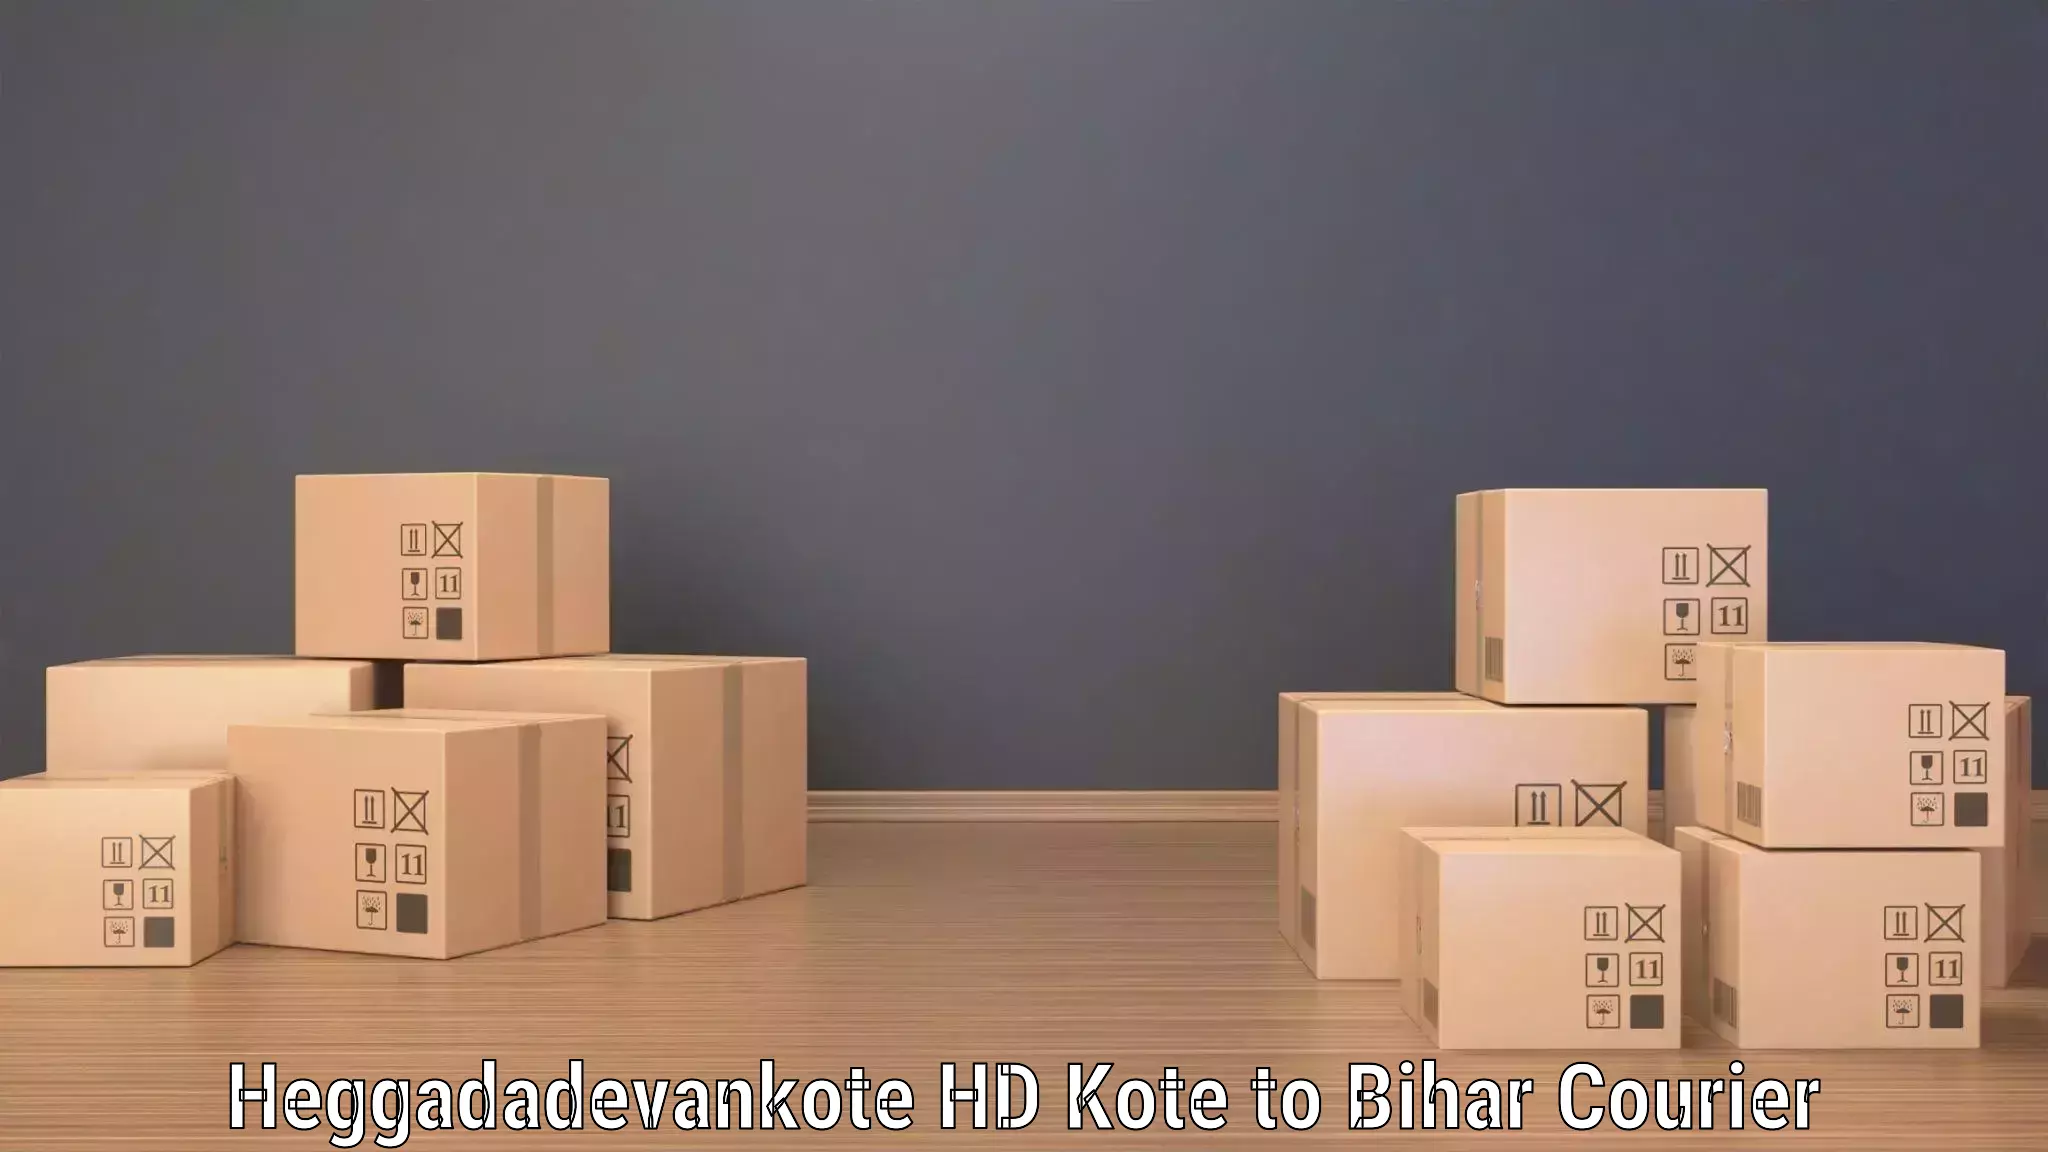 Door-to-door shipment Heggadadevankote HD Kote to Andar Siwan